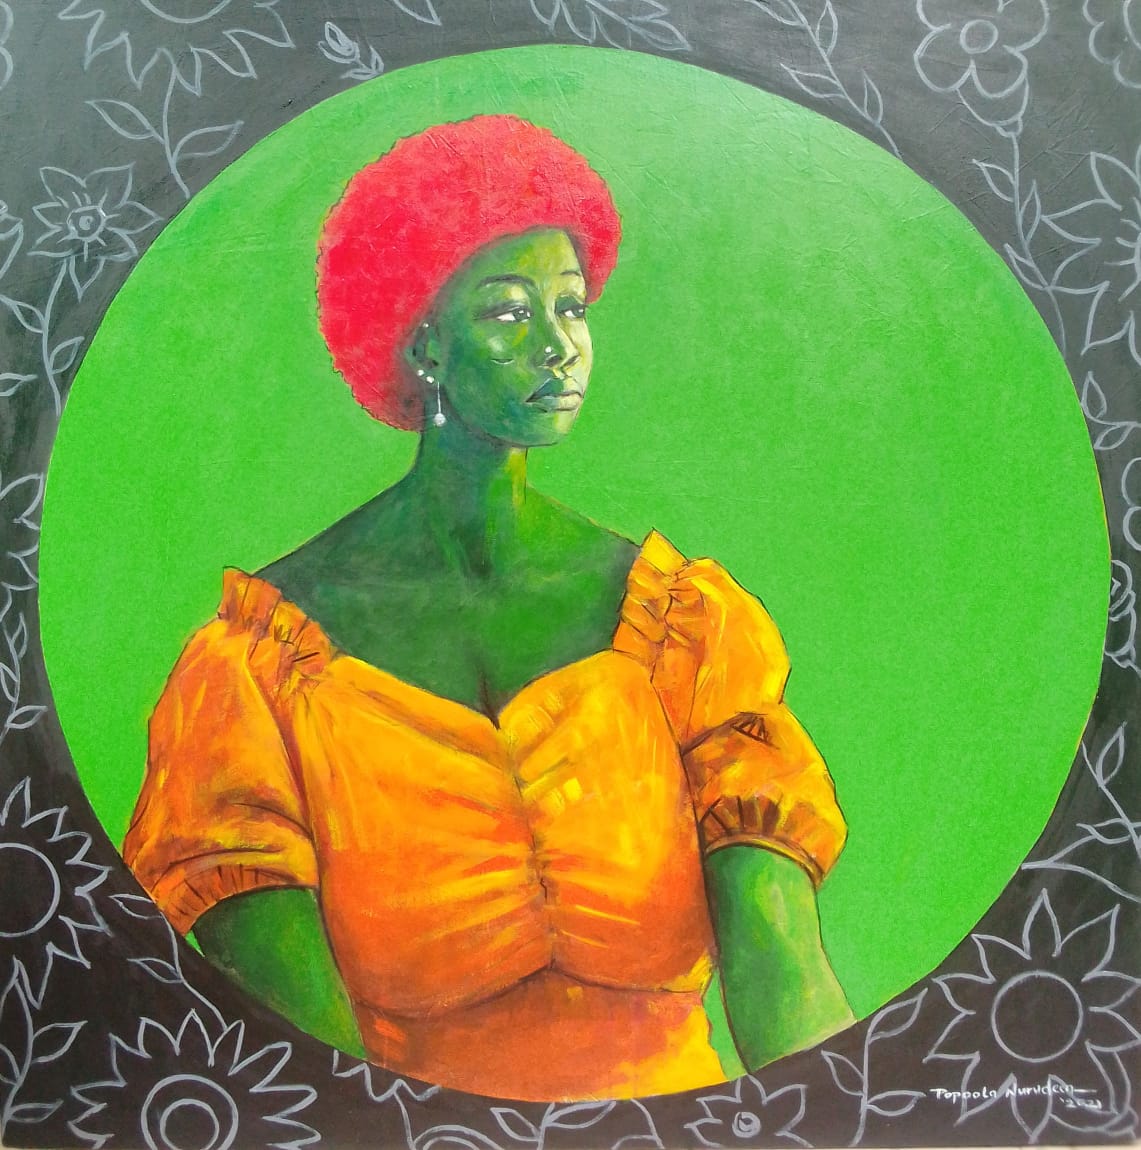 Popoola Nurudeen, "In retrospect", acrylic on canvas, 122 x 122cm, c. 2021. Sometimes, looks can